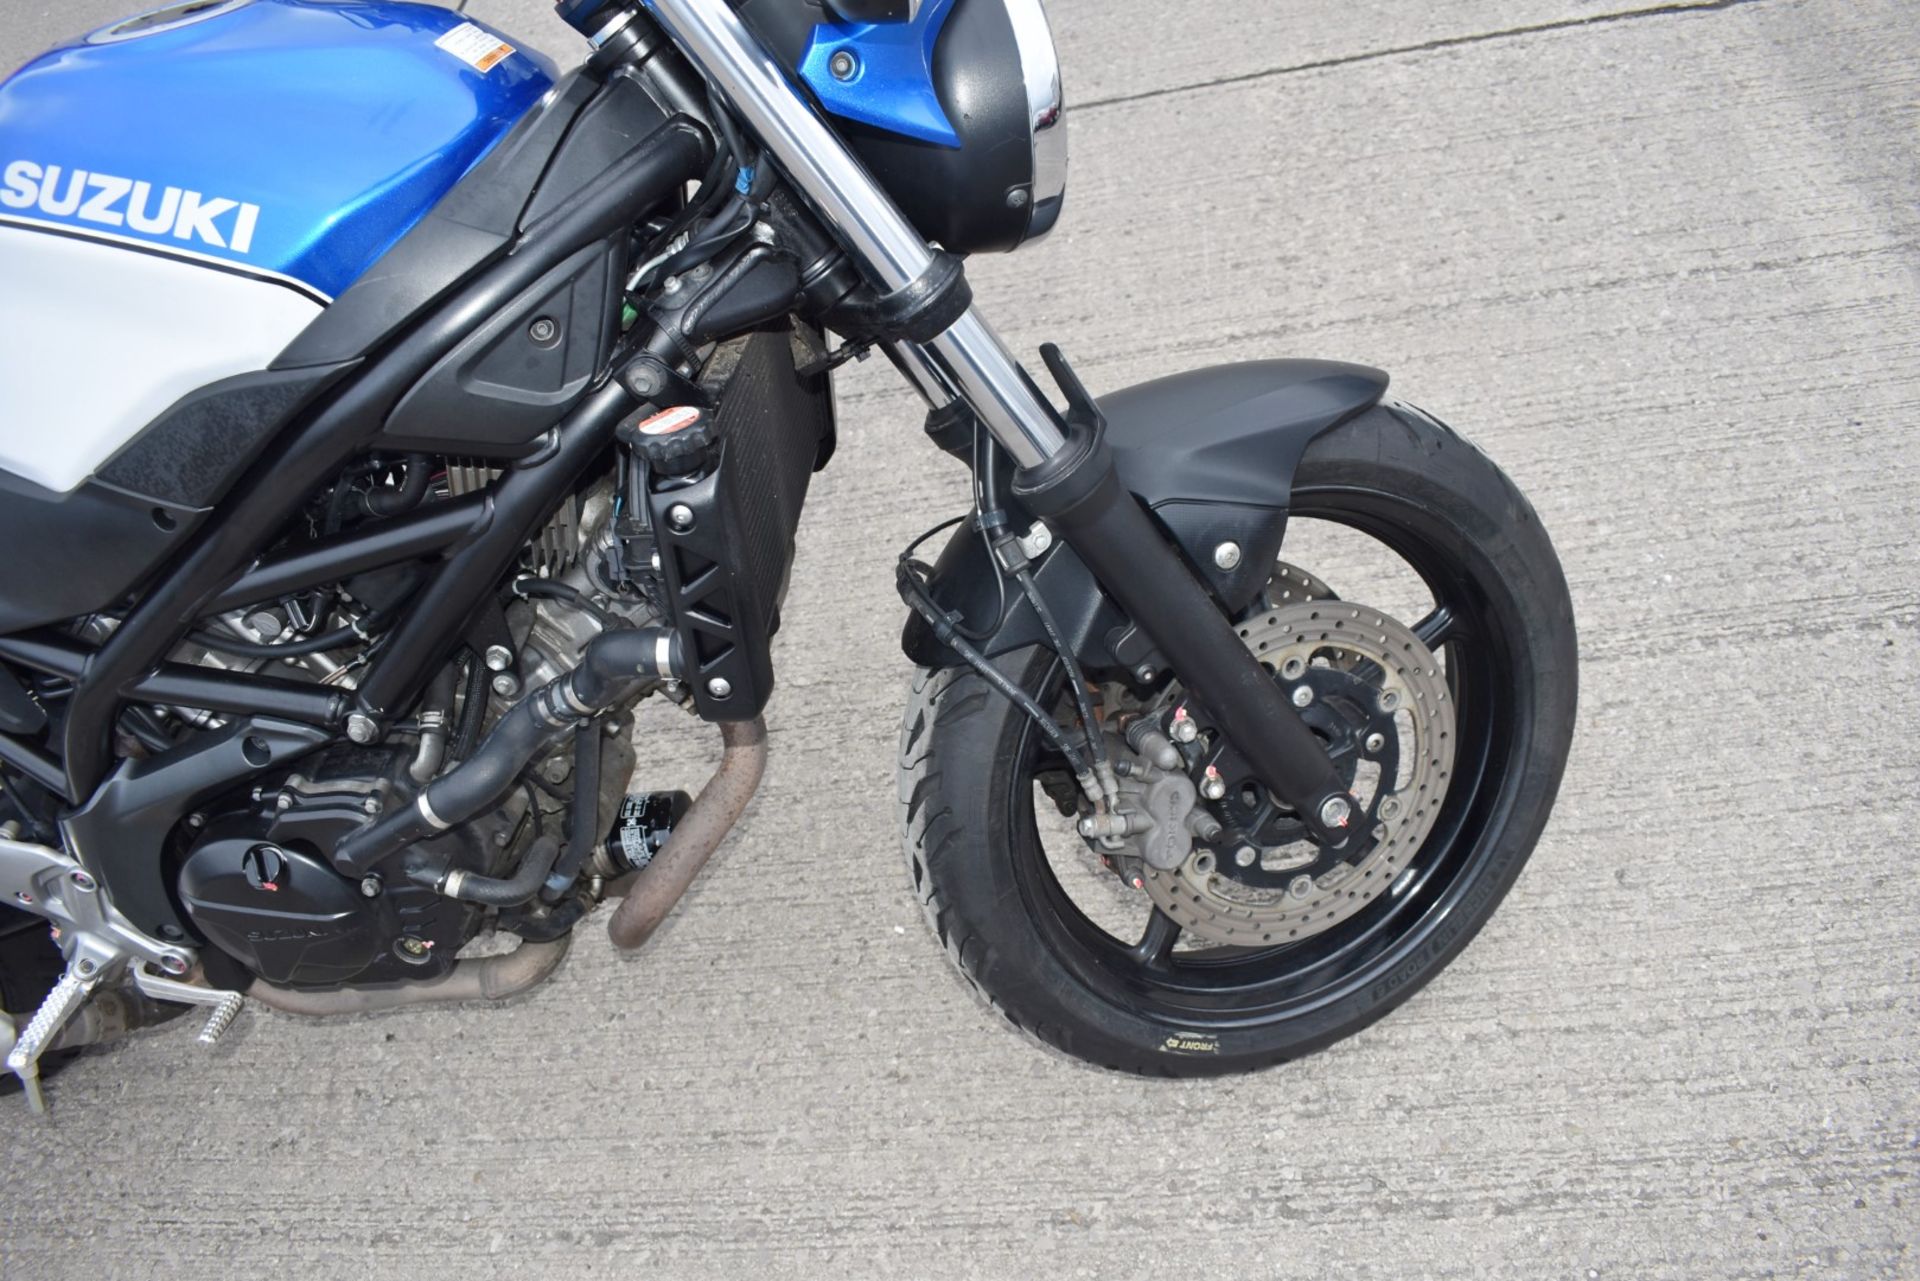 2018 Suzuki SV650 Motorcycle - BA18 UFV - Mileage: 18,188 - Image 23 of 25